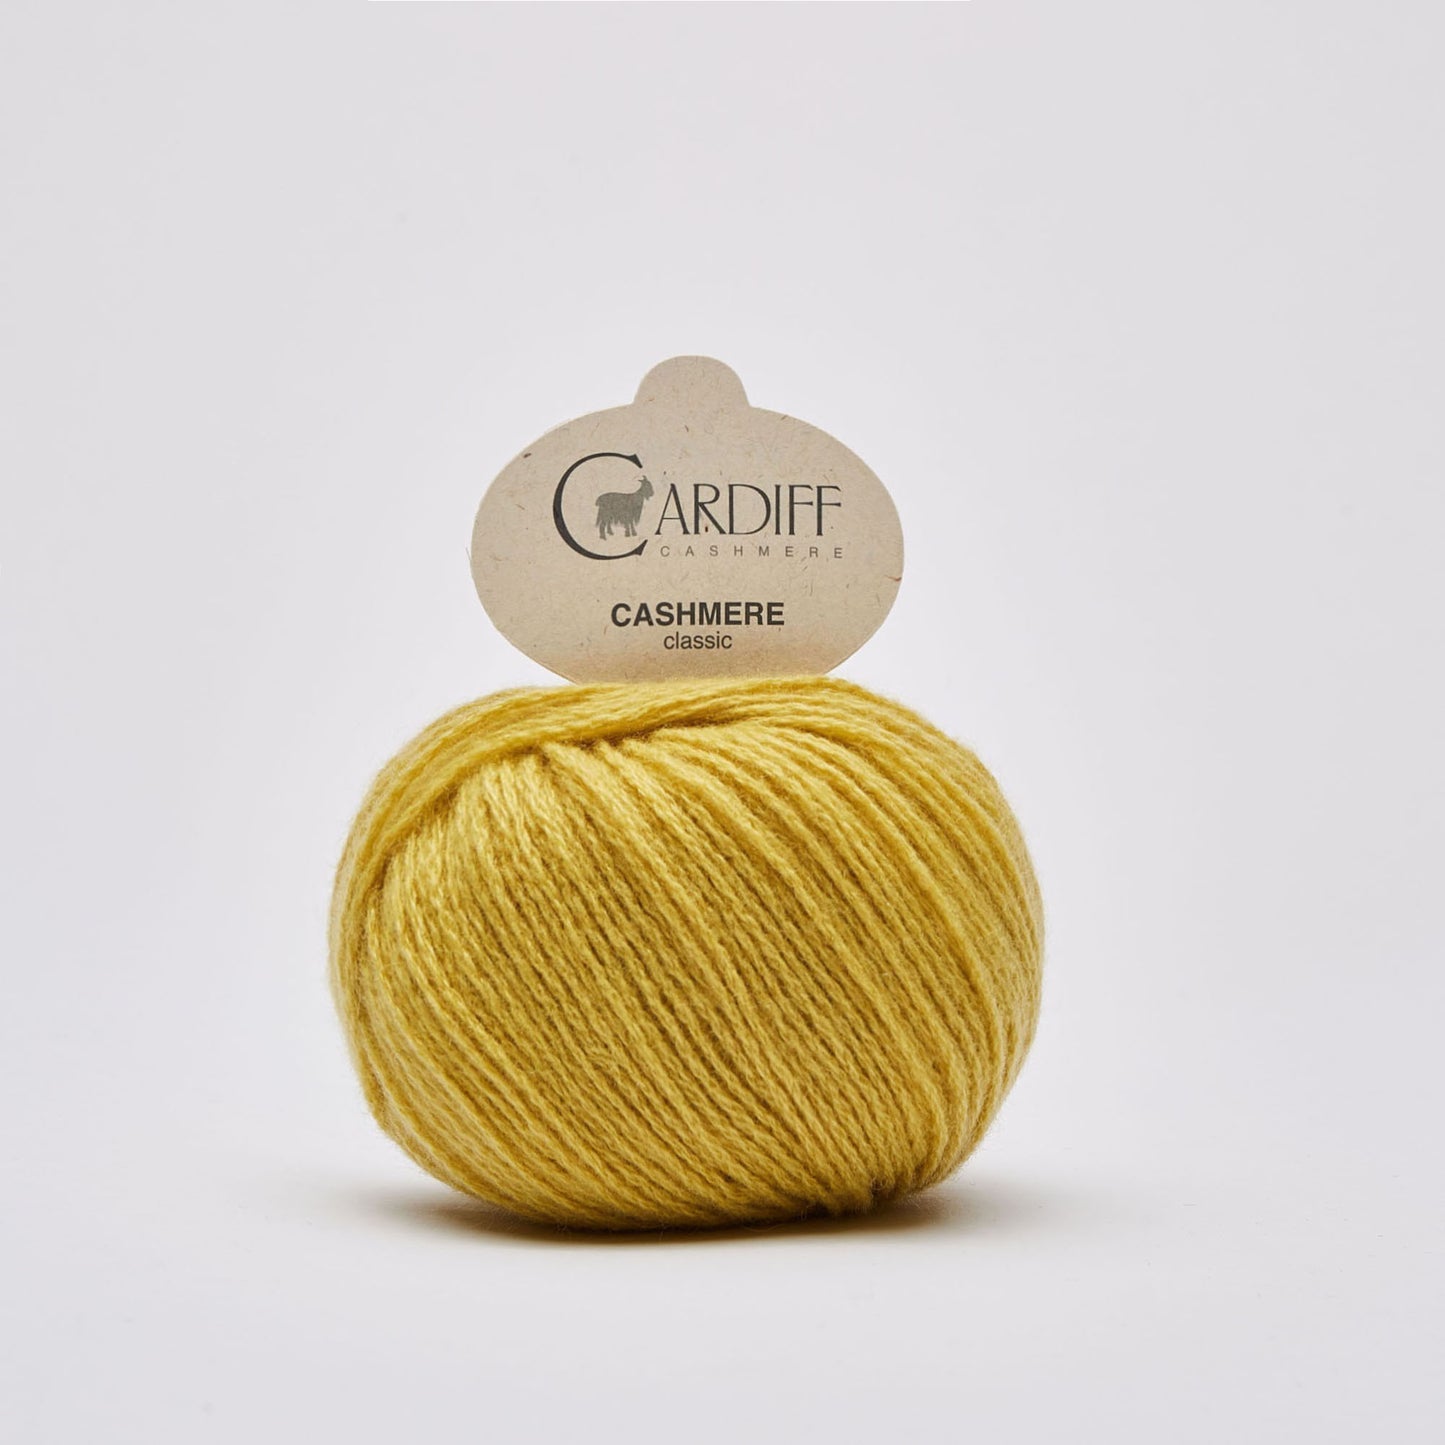 Cardiff CLASSIC gentle yarn, 683, KAORI, comp: 100% Cashmere